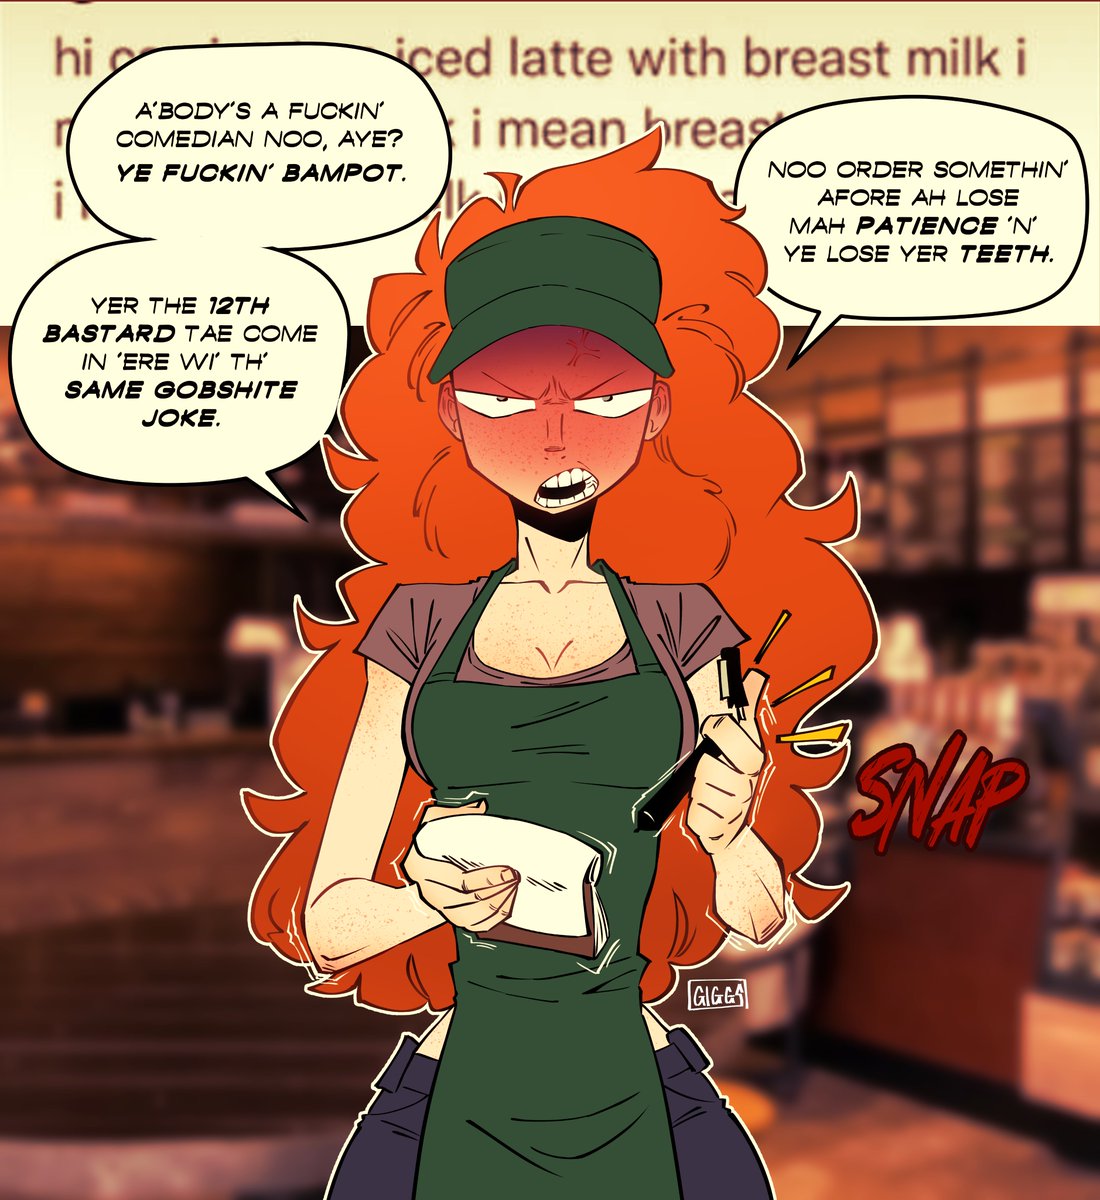 [OC] Olivia's had enough of the tiddy milk latte meme 